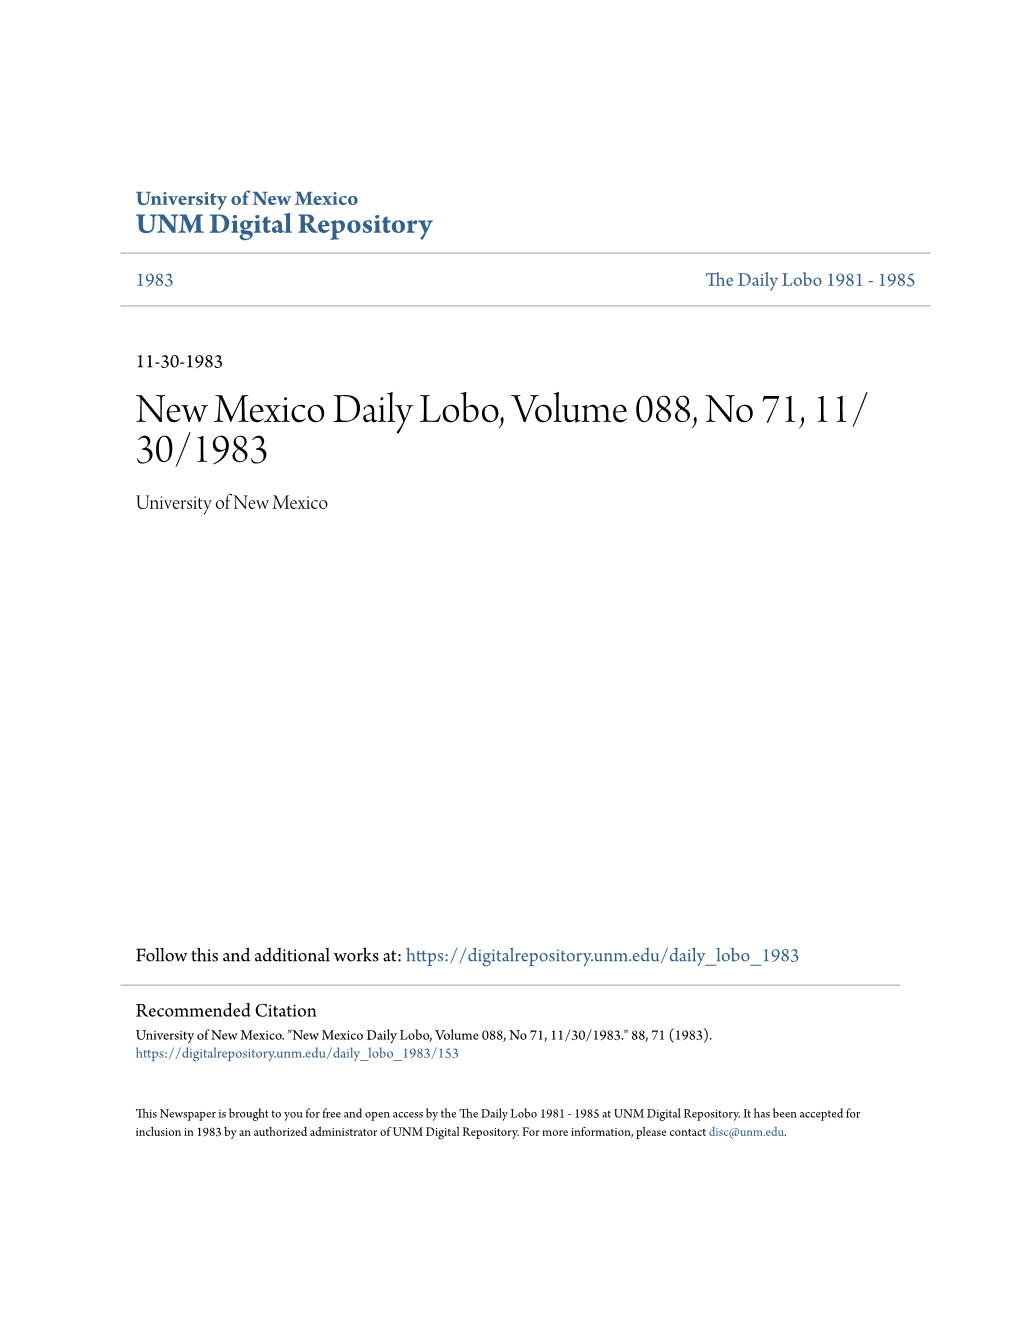 New Mexico Daily Lobo, Volume 088, No 71, 11/30/1983." 88, 71 (1983)